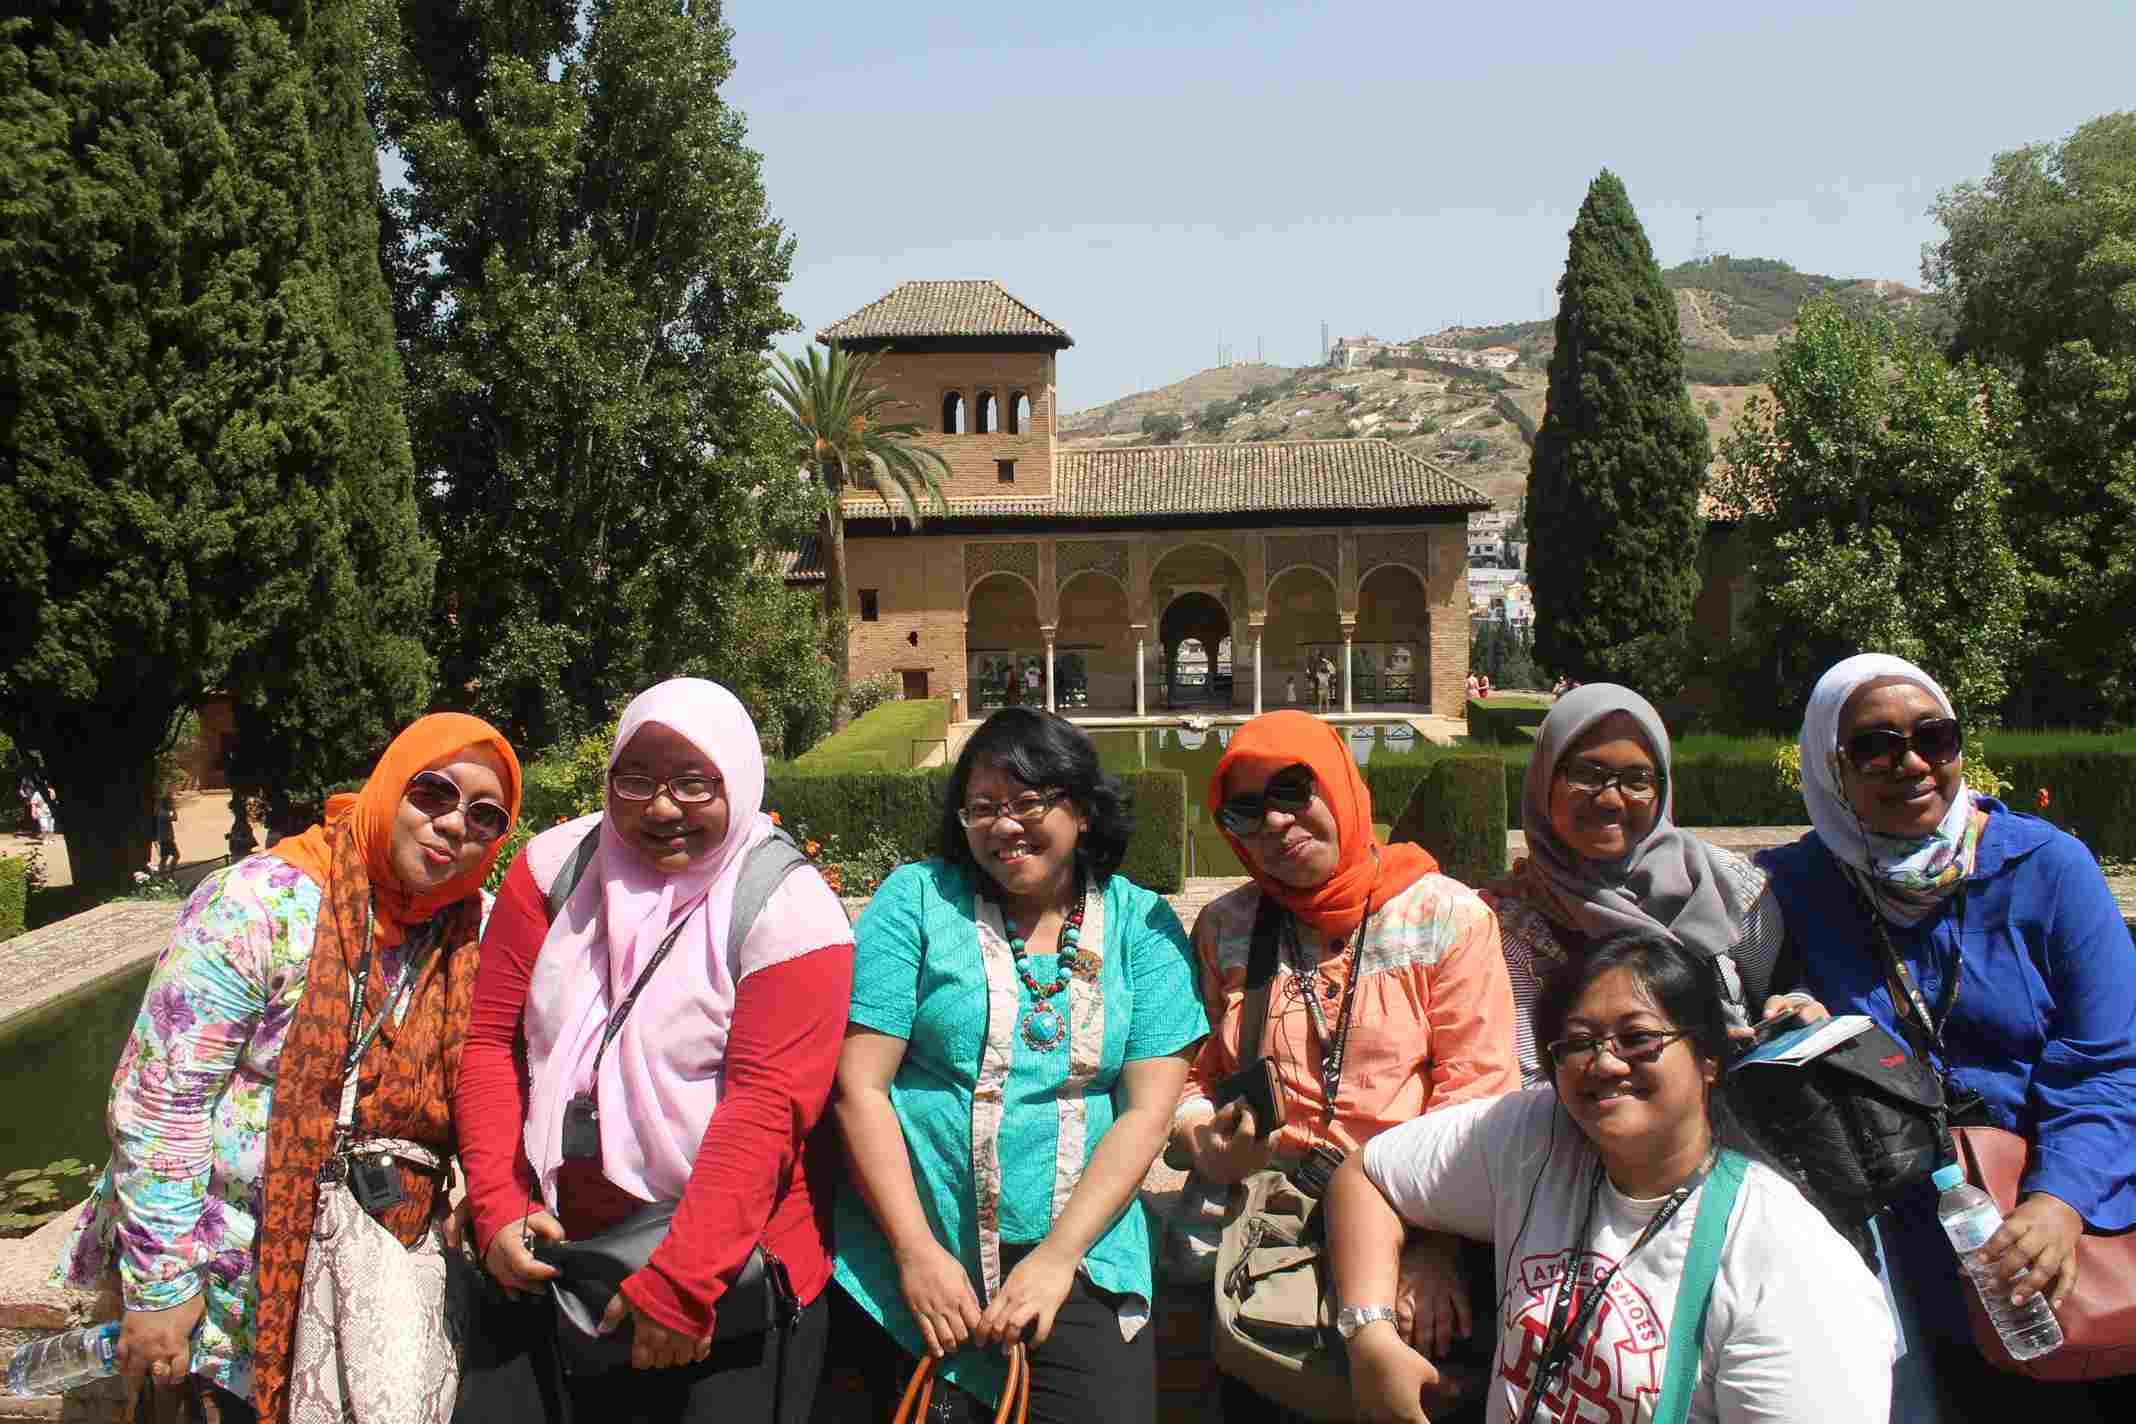 Alhambra Tour - Muslim Women Travel Granada